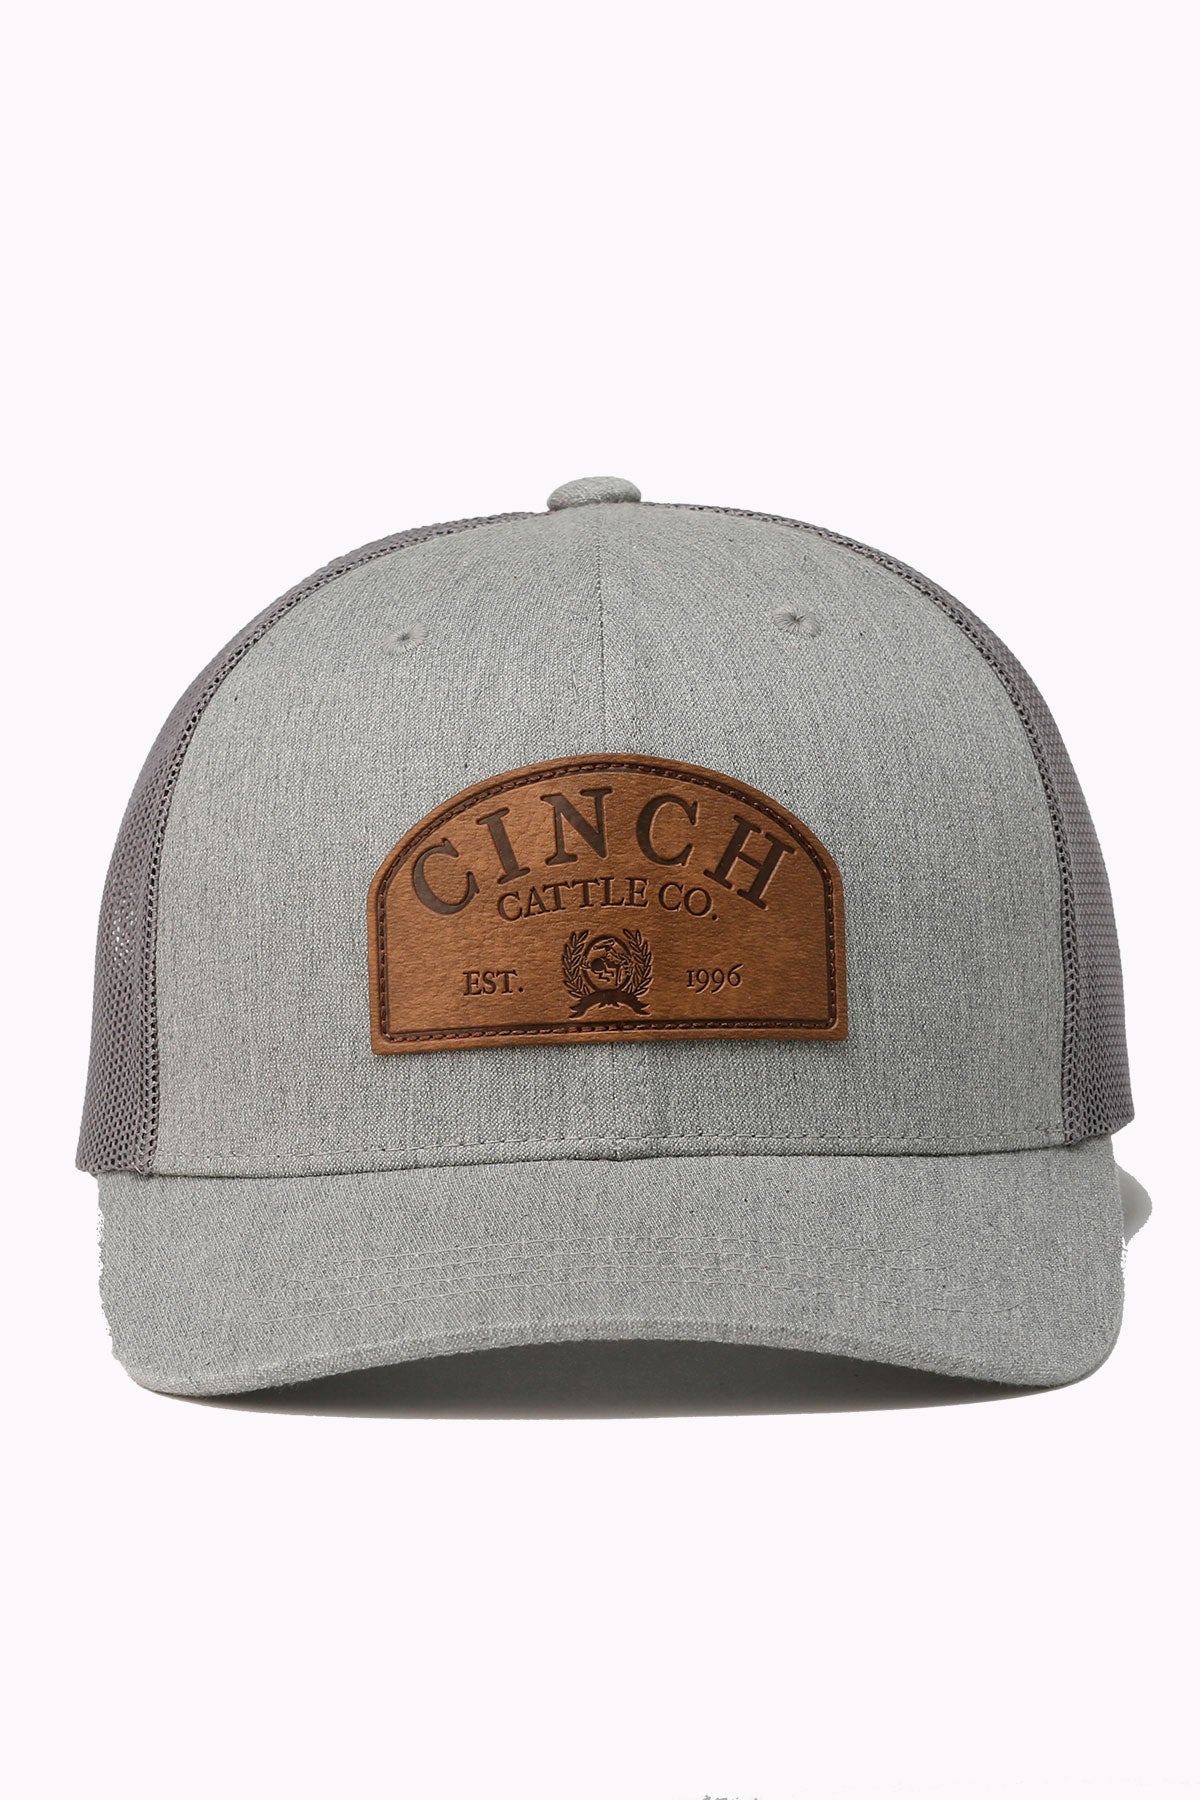 Cinch Leather Patch Cap- Grey